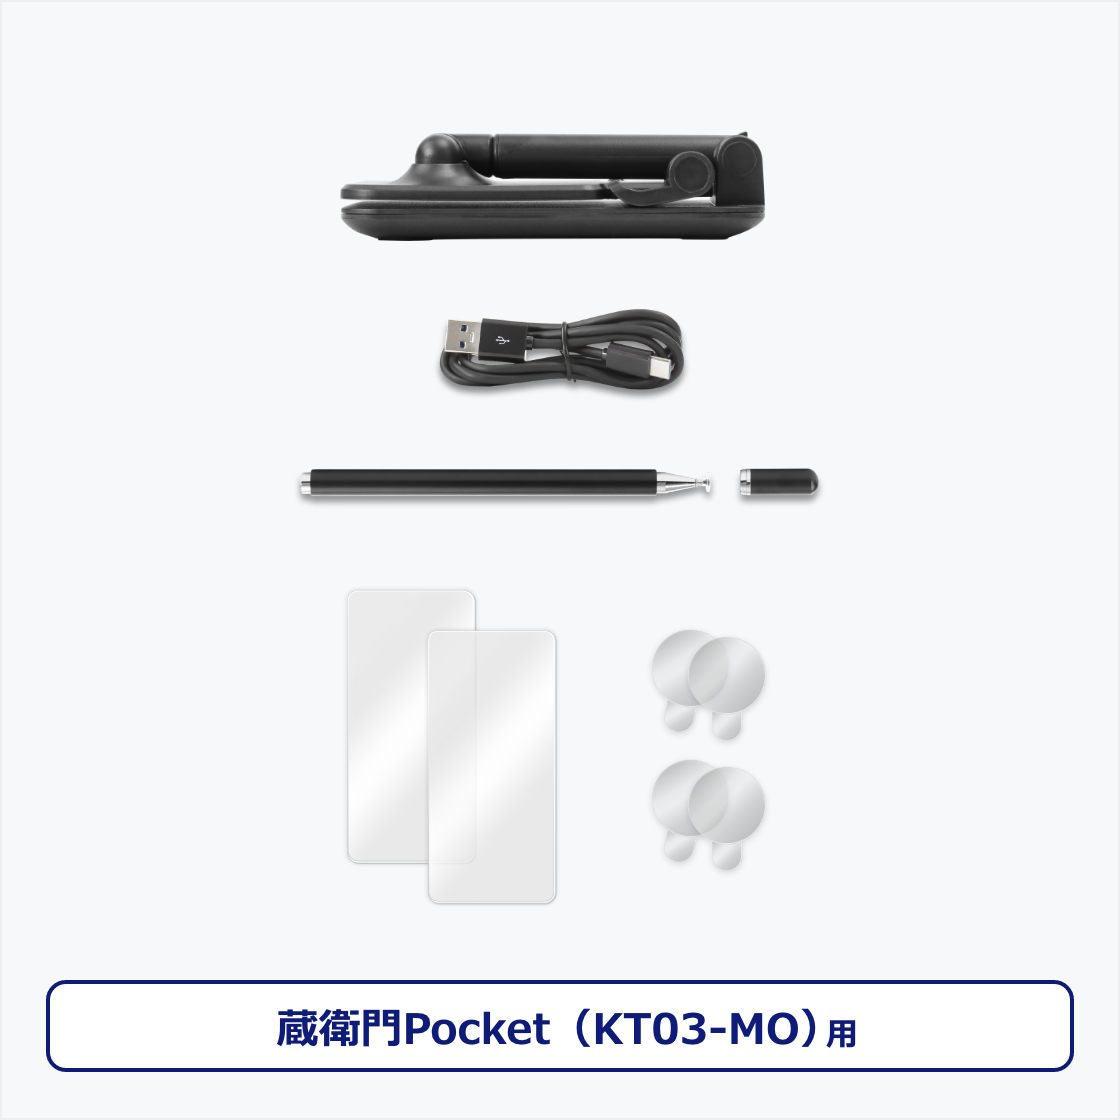 Power Kit for qPocketiKT03-MOj